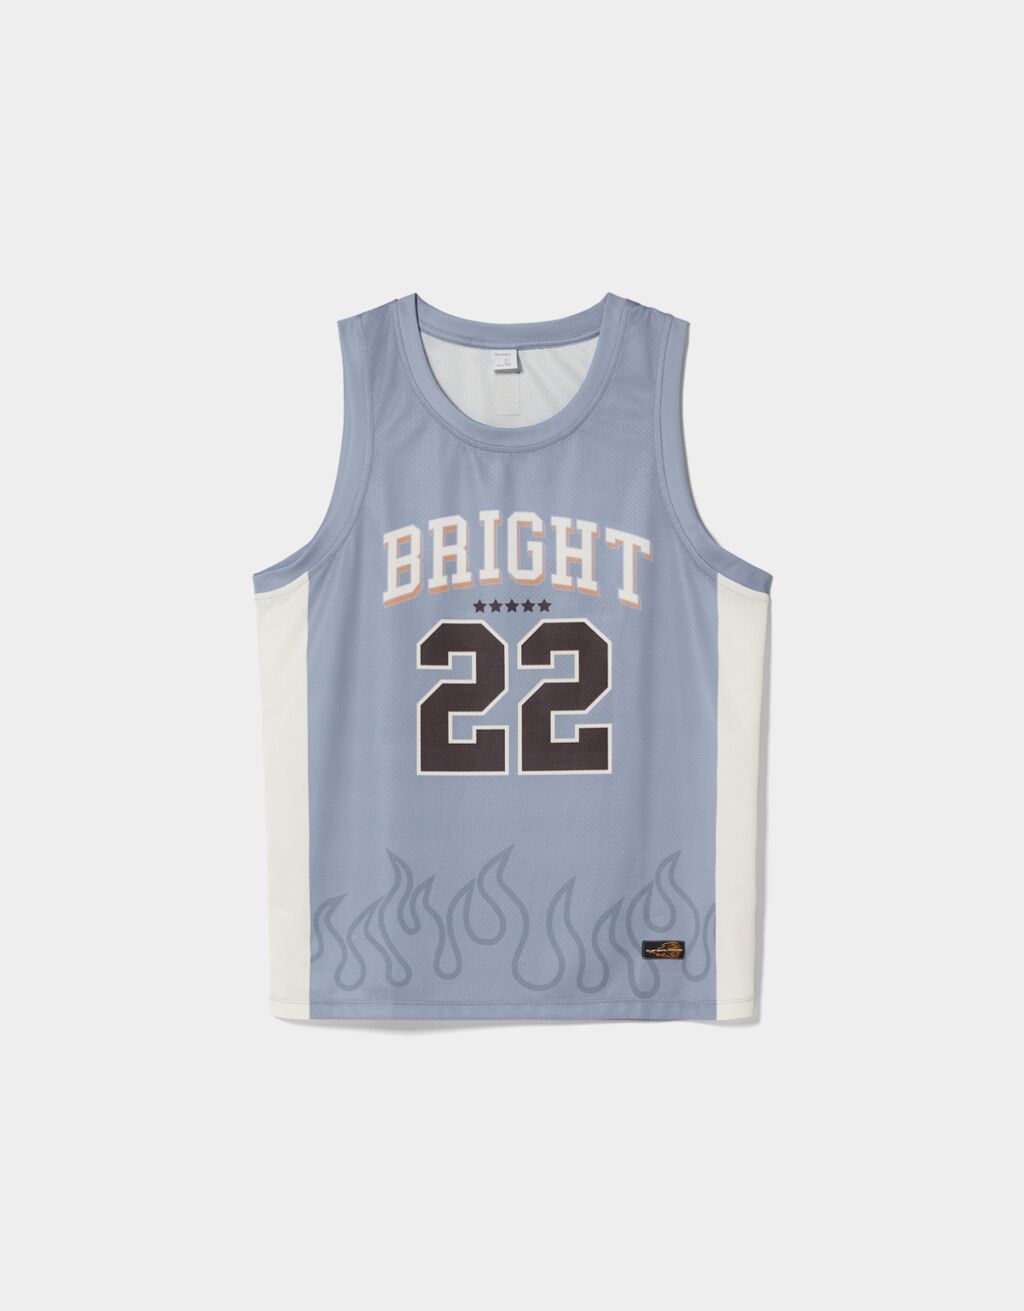 Flame print sleeveless mesh basketball T-shirt